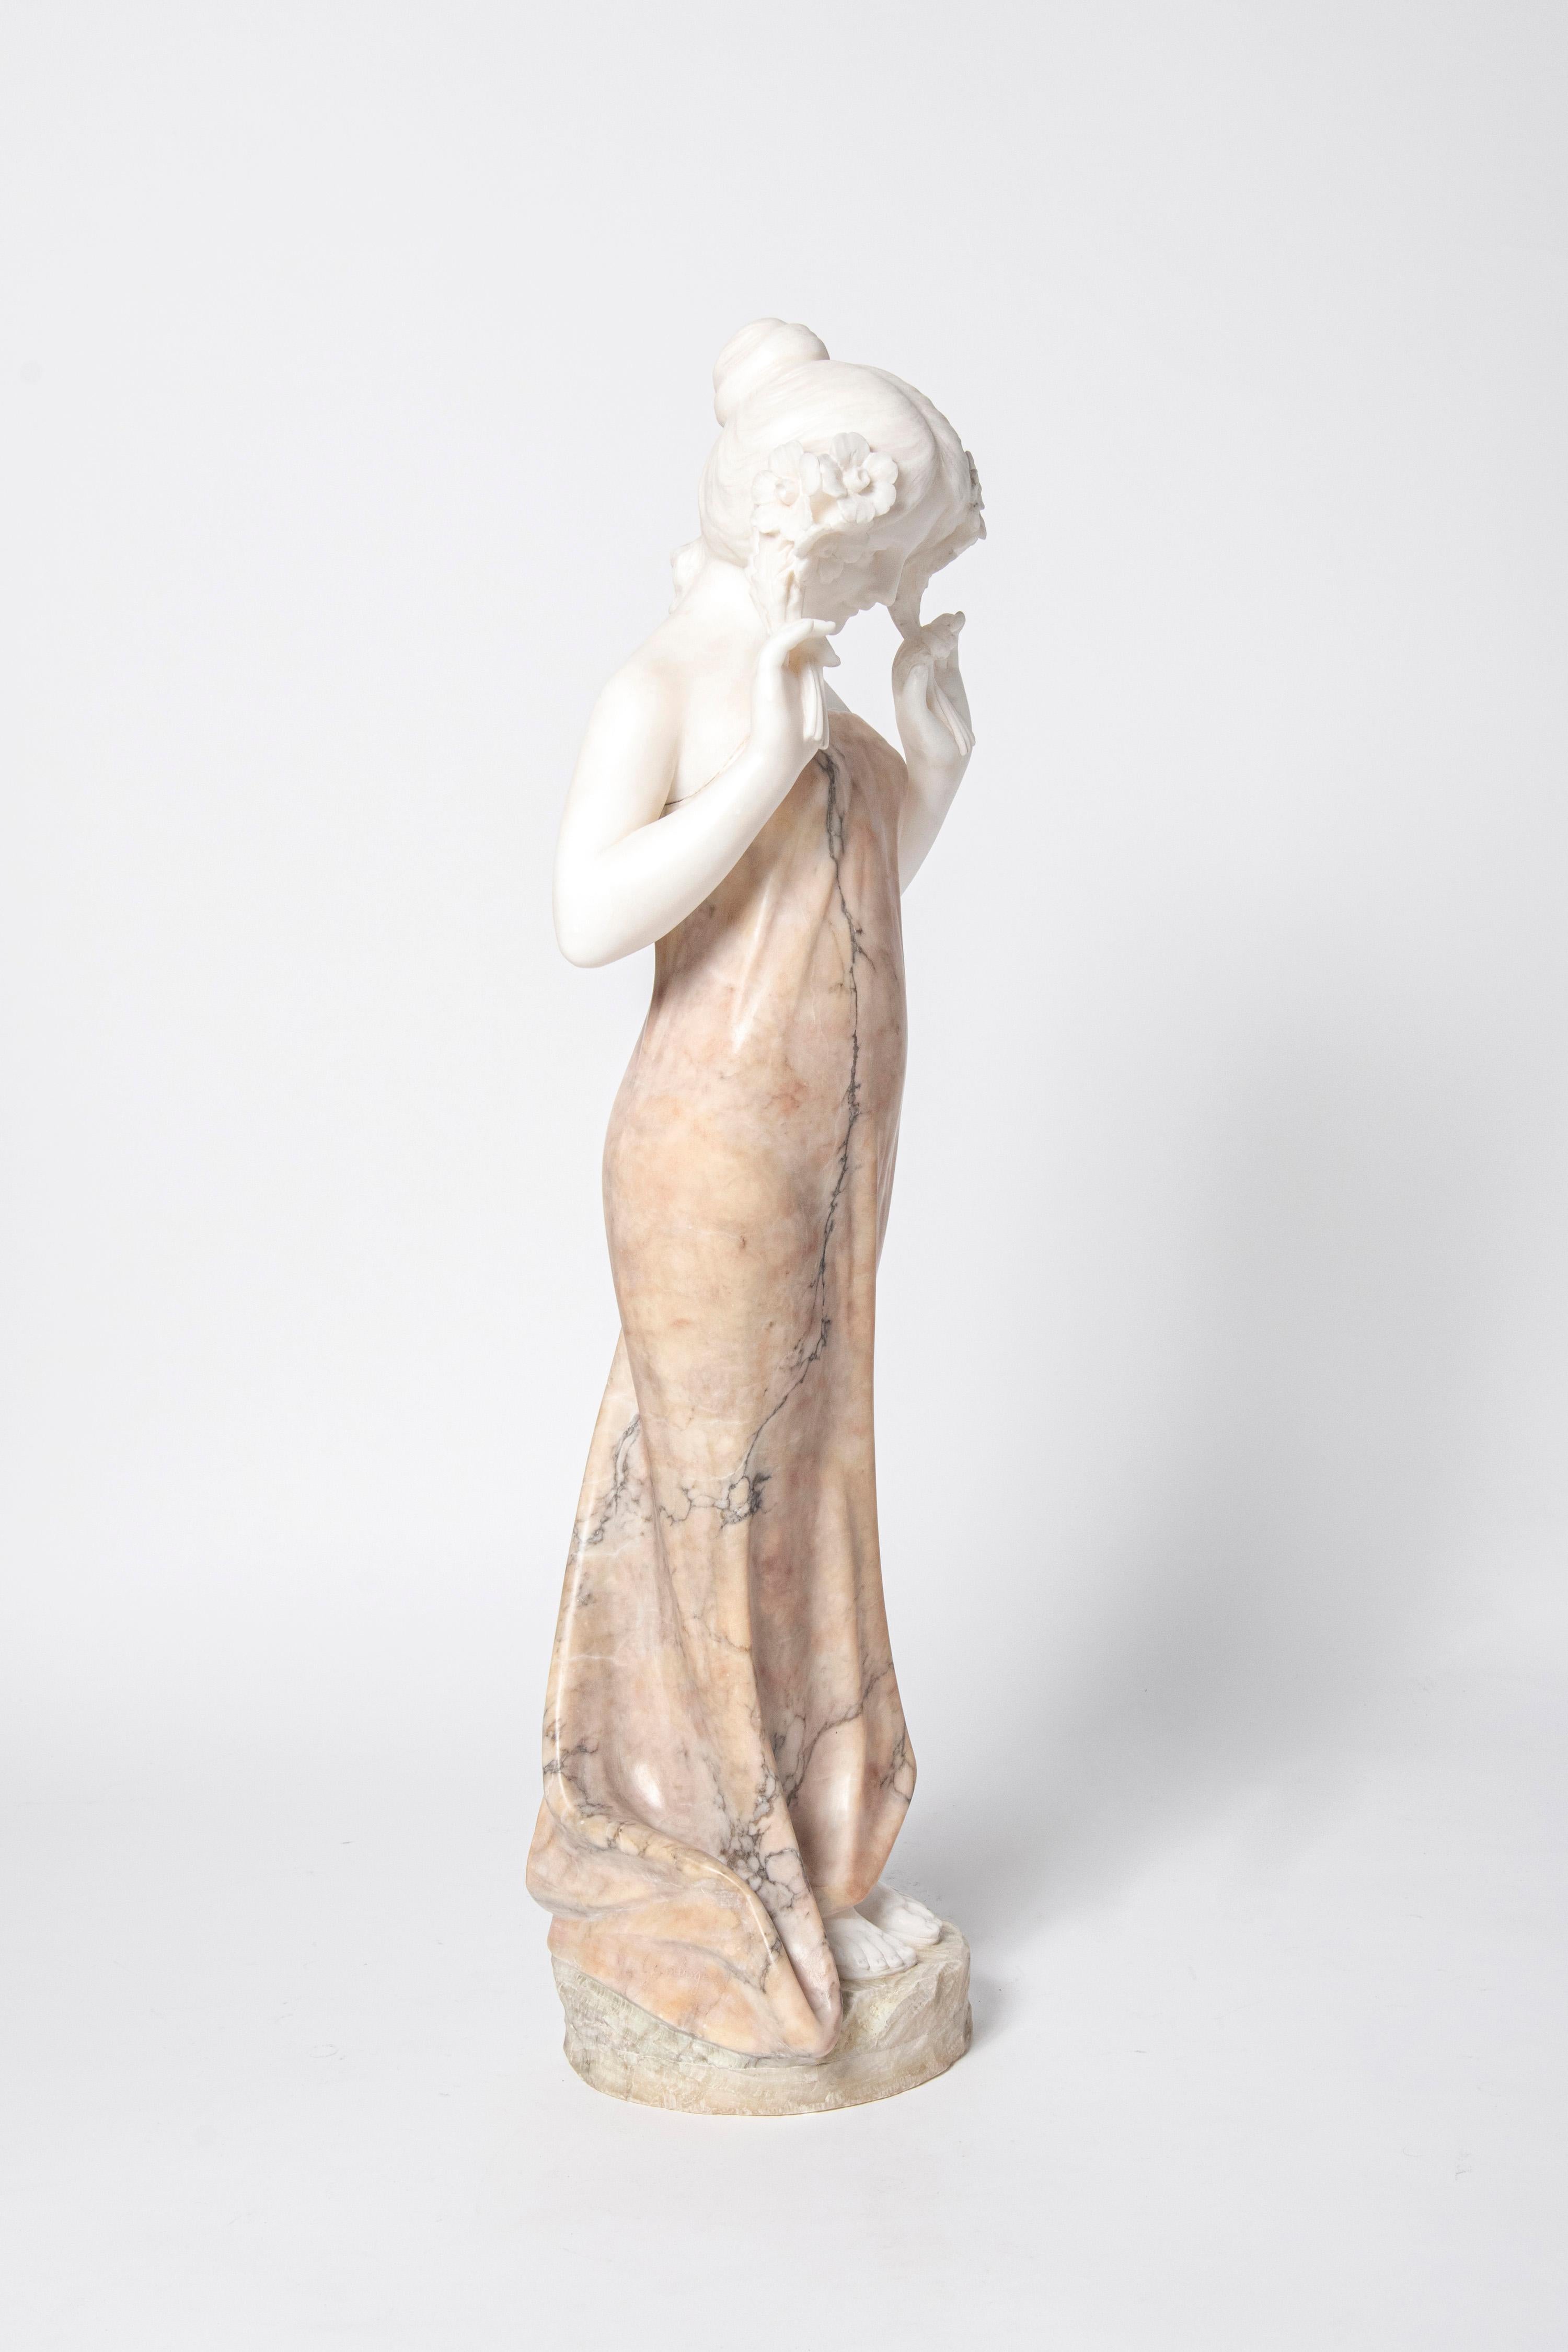 Alabaster sculpture signed G. Gambogi. Italy, early 20th century.
Giuseppe Gambogi (1862 - 1938).